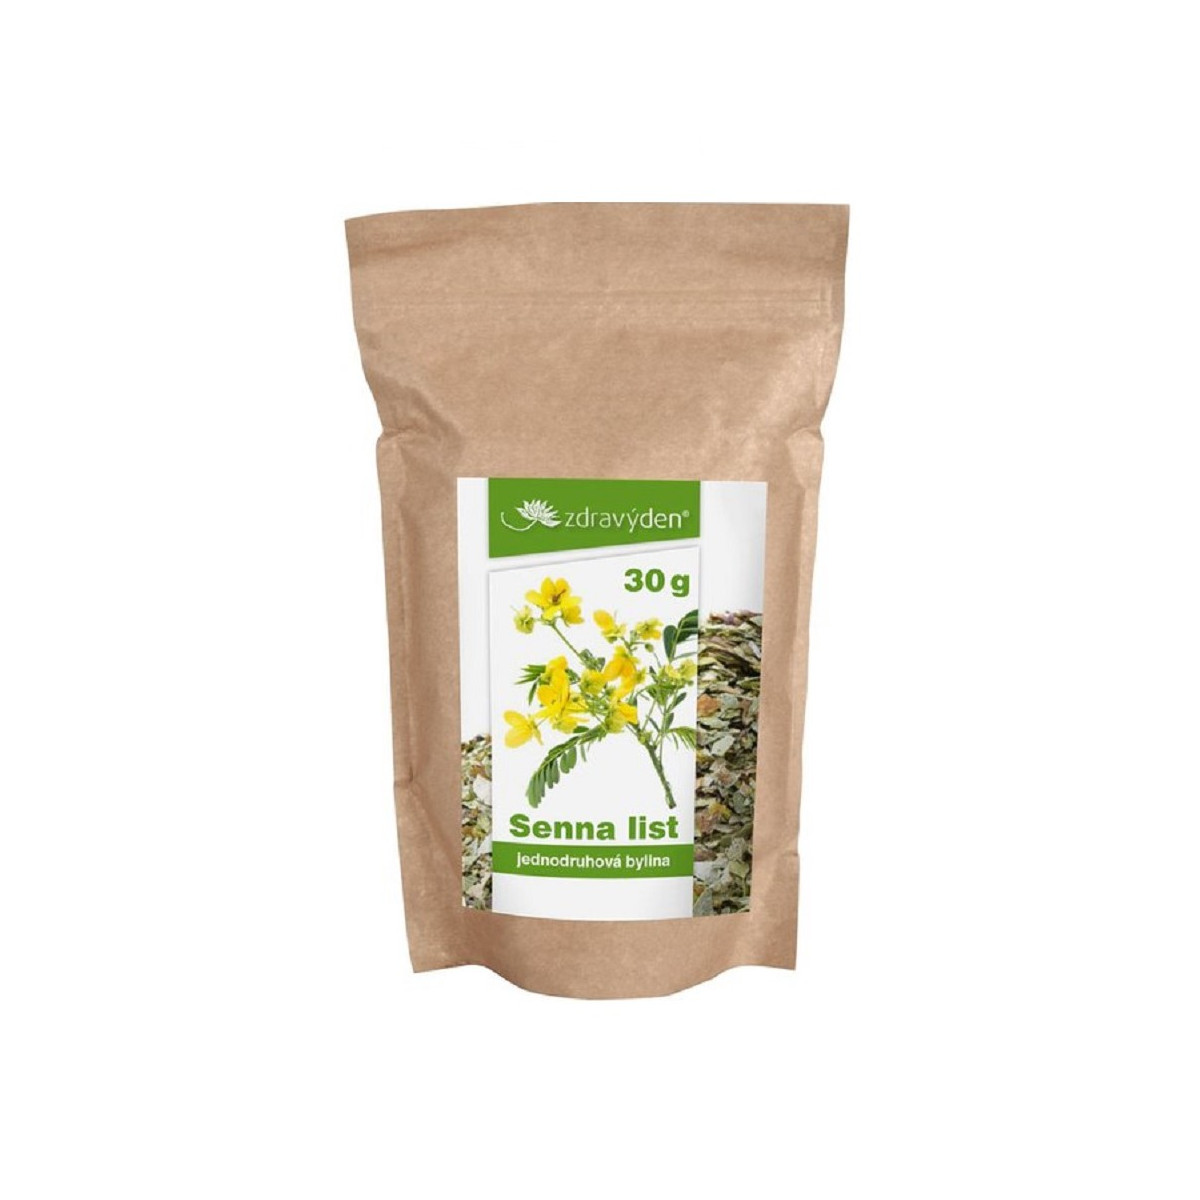 Senna list - prodej bylinných čajů - 30 g